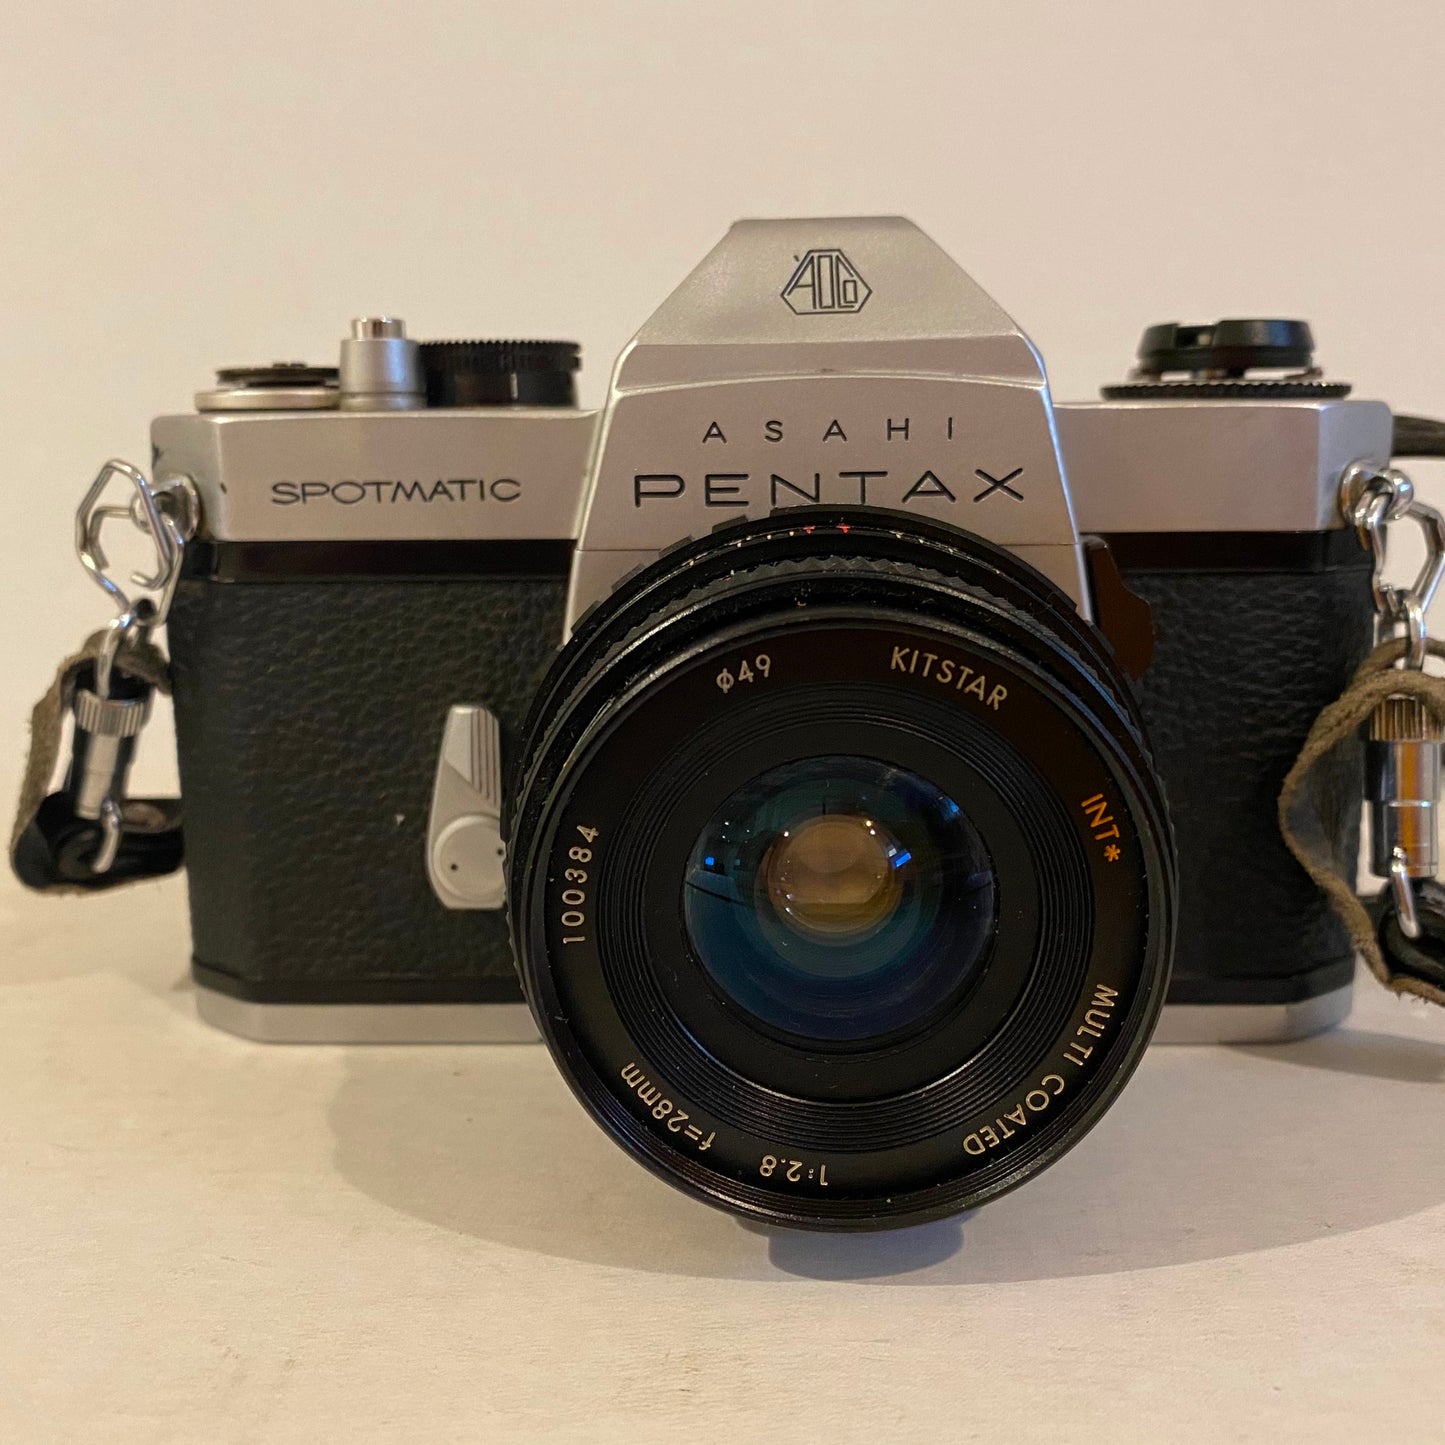 Vintage Asahi Pentax Spotmatic SPII Film Camera - SMC Takumar and Kitstar Lenses